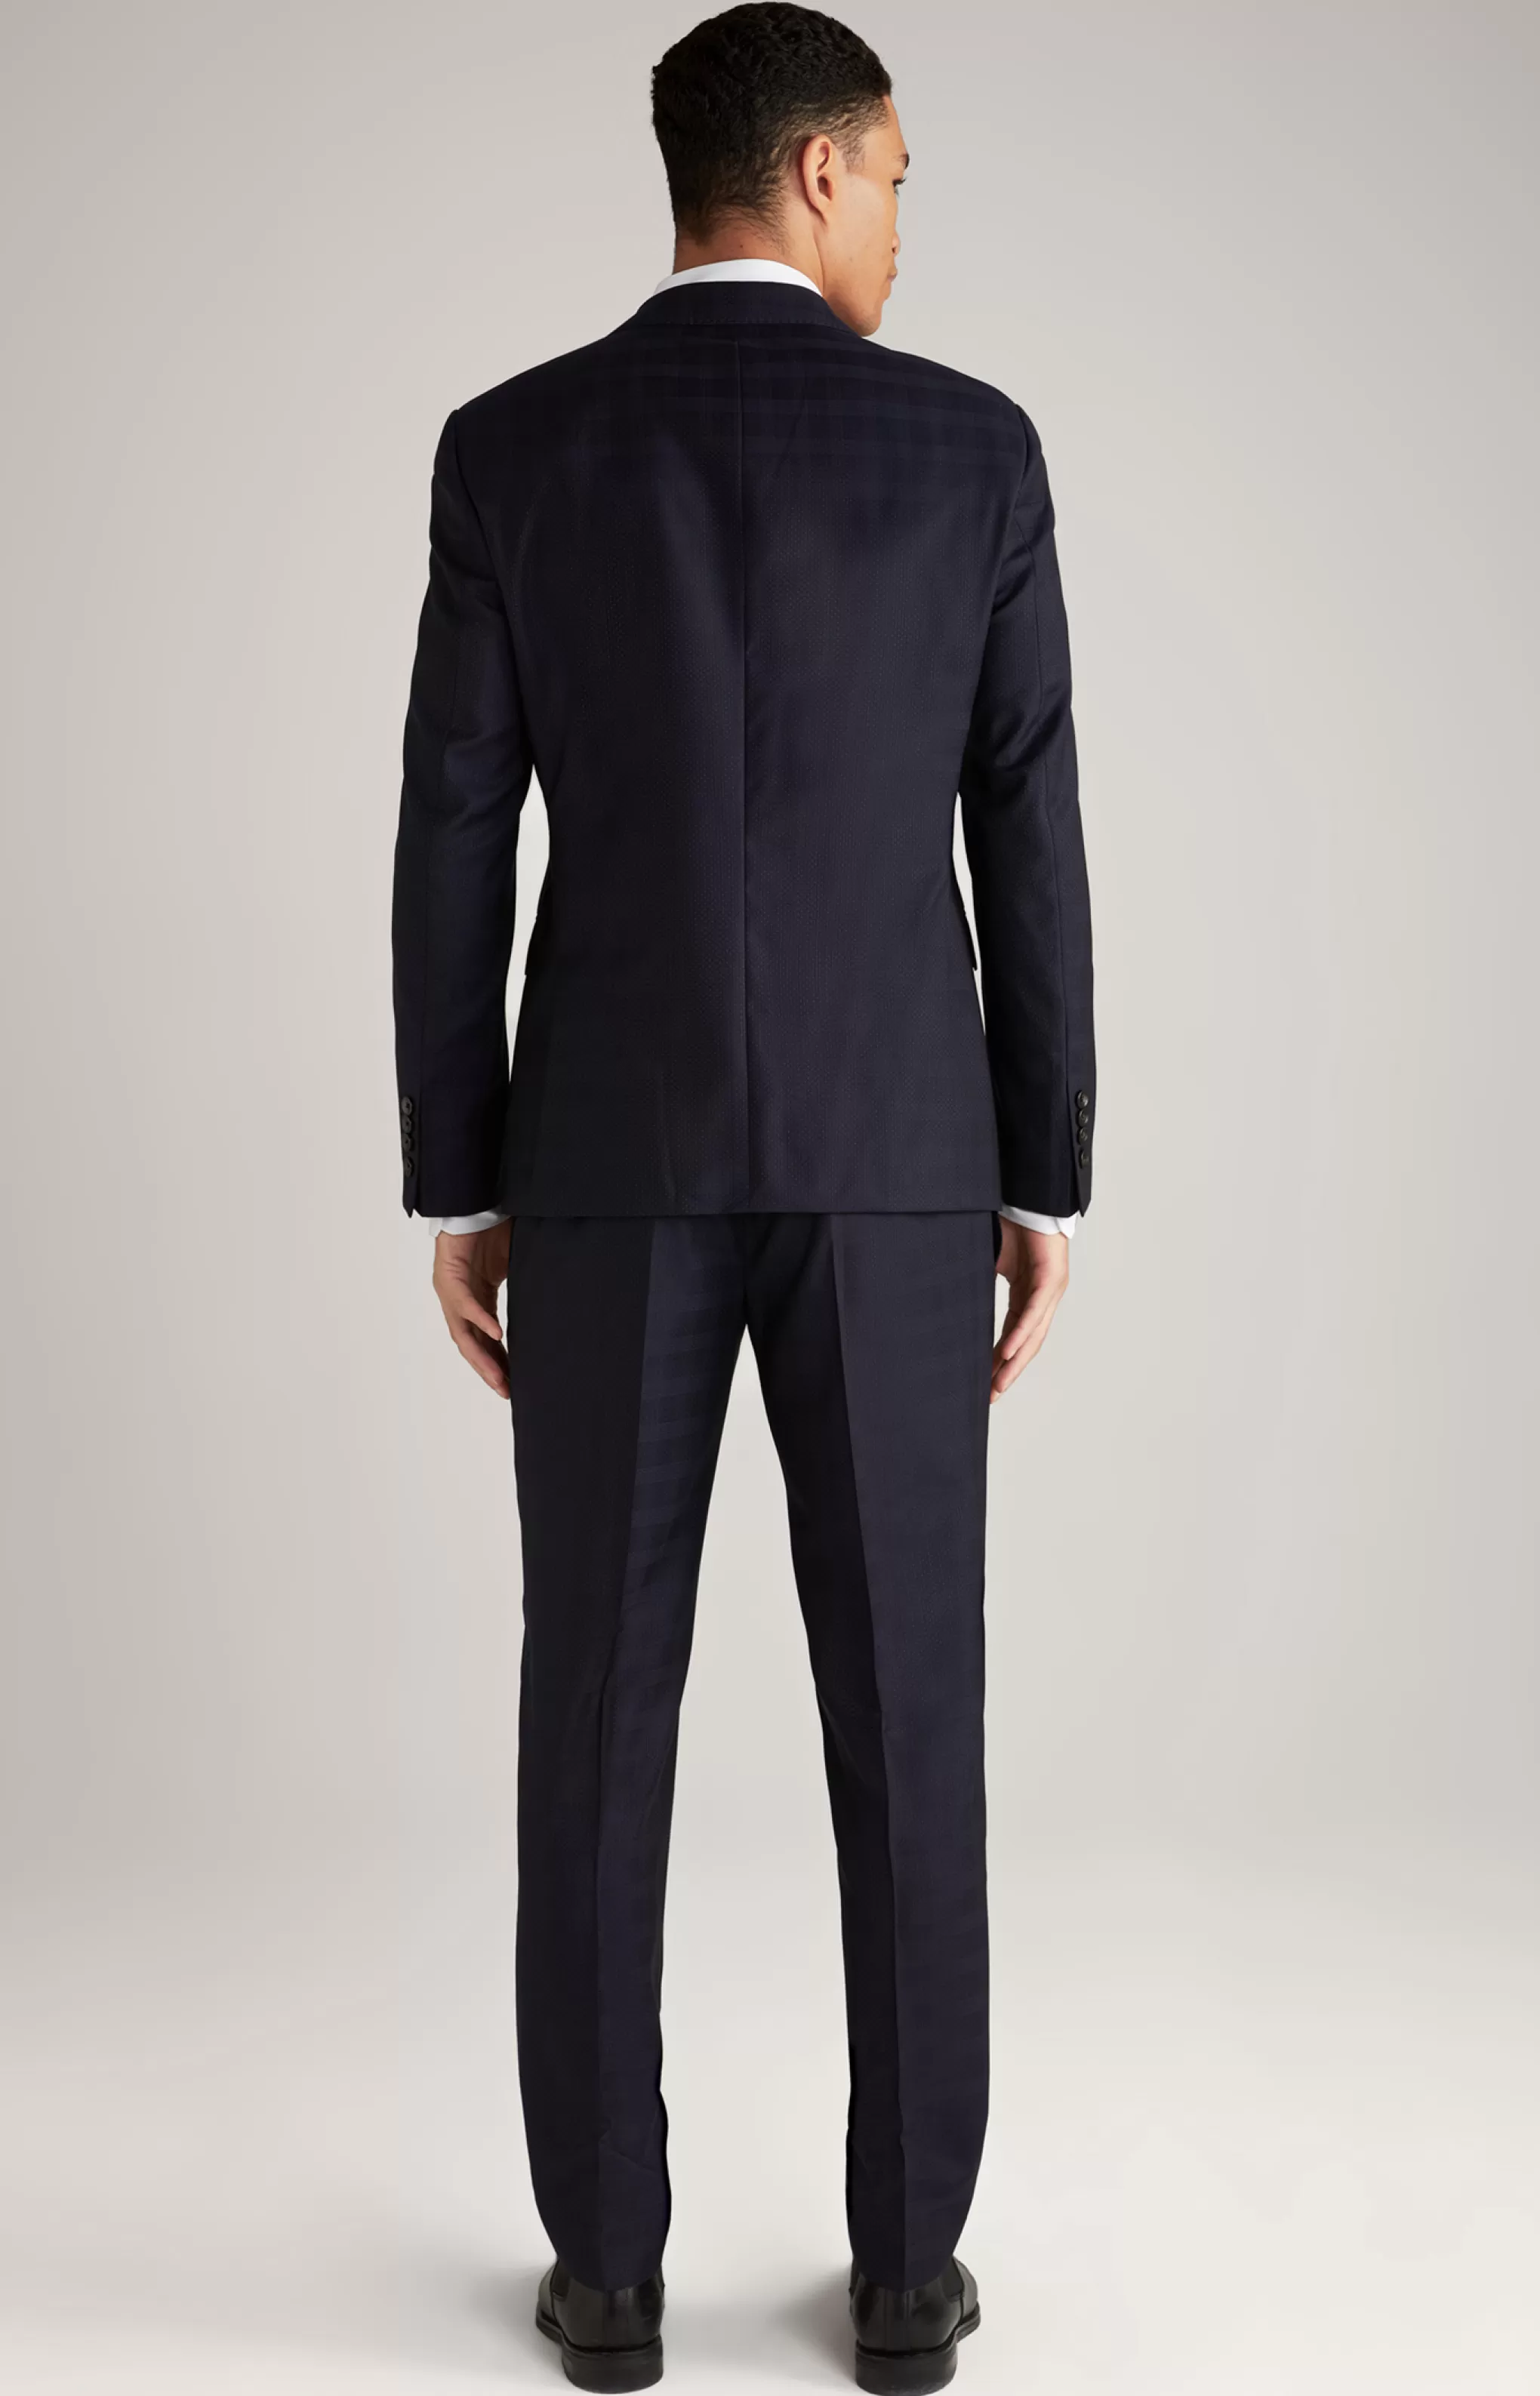 Suits | Clothing*JOOP Suits | Clothing Herby Blayr Virgin Wool Suit in Dark Blue Check